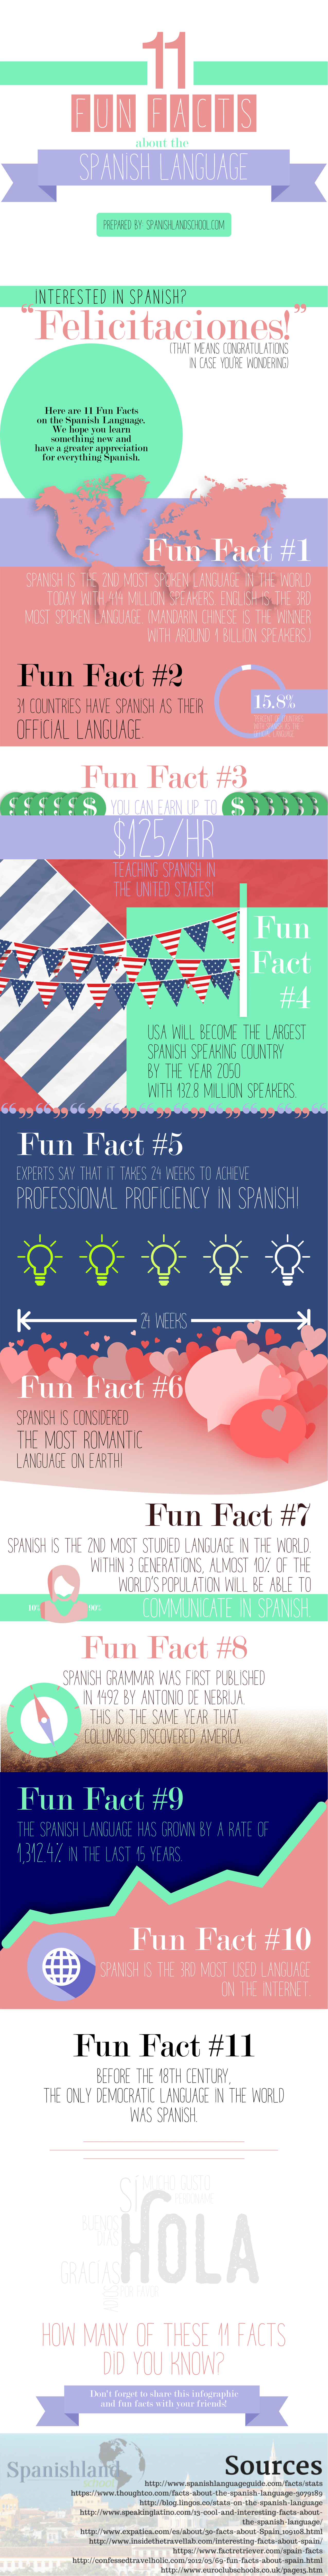 fun facts spanish